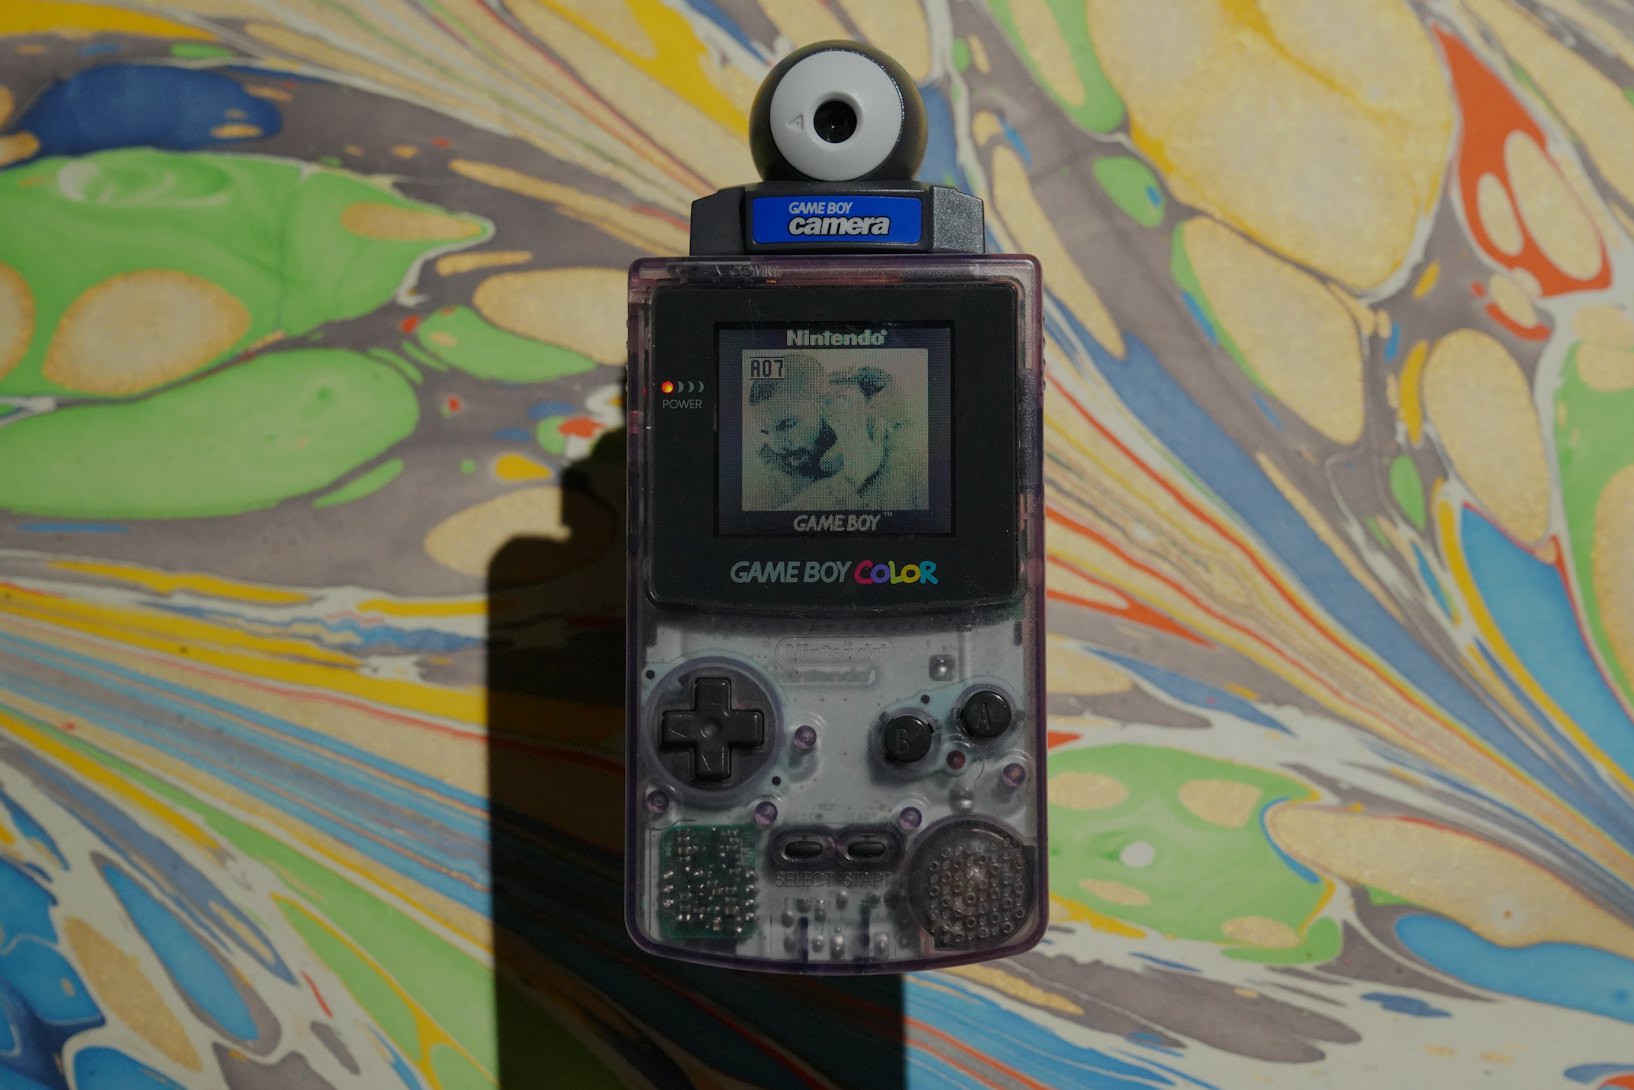 Nintendo Switch Vs. Game Boy Photo Shows Nintendo's Huge Progress